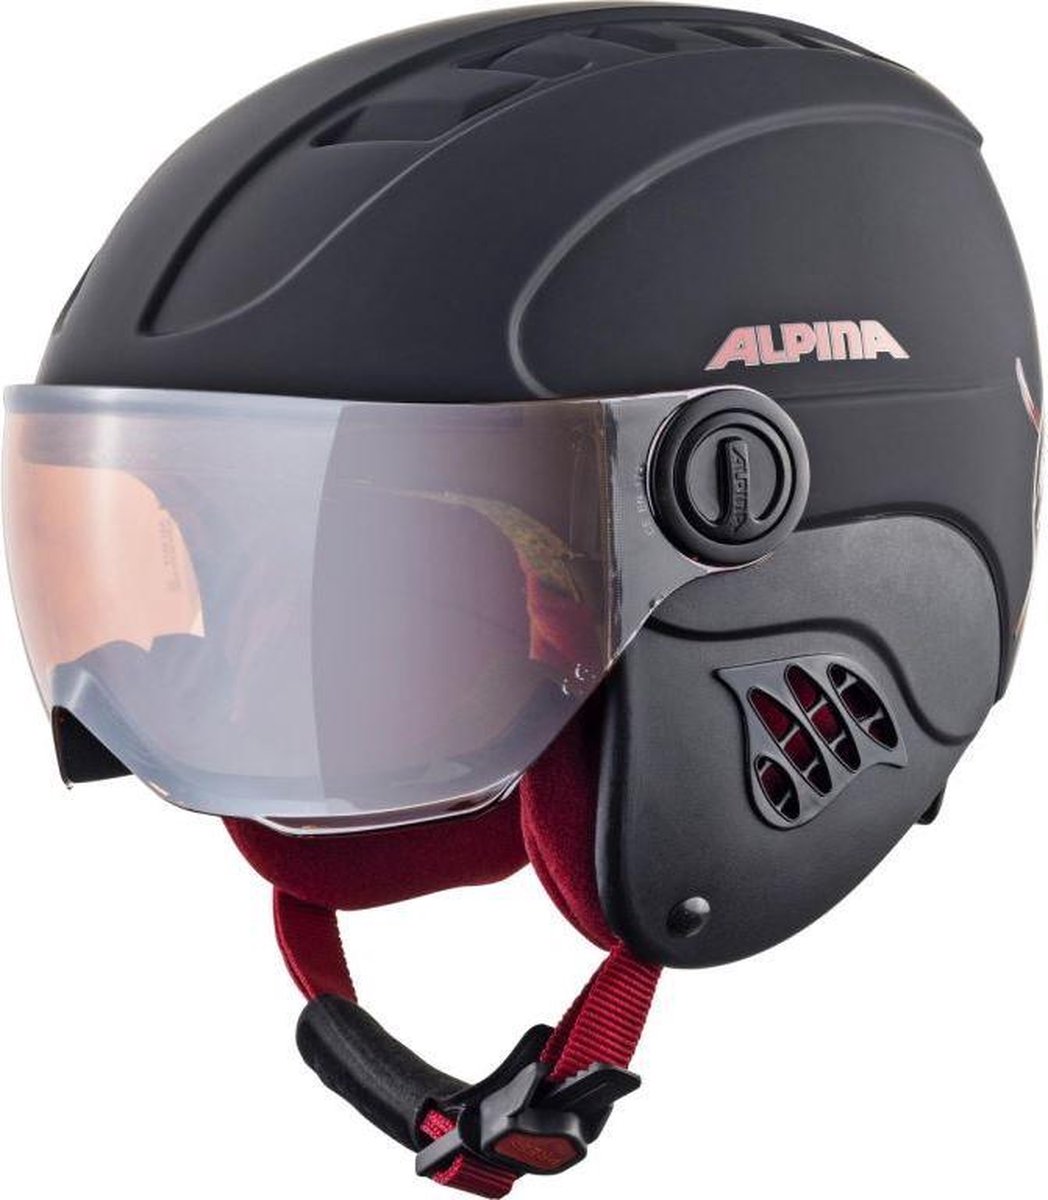 Alpina kinder skihelm 51-55 black-red |